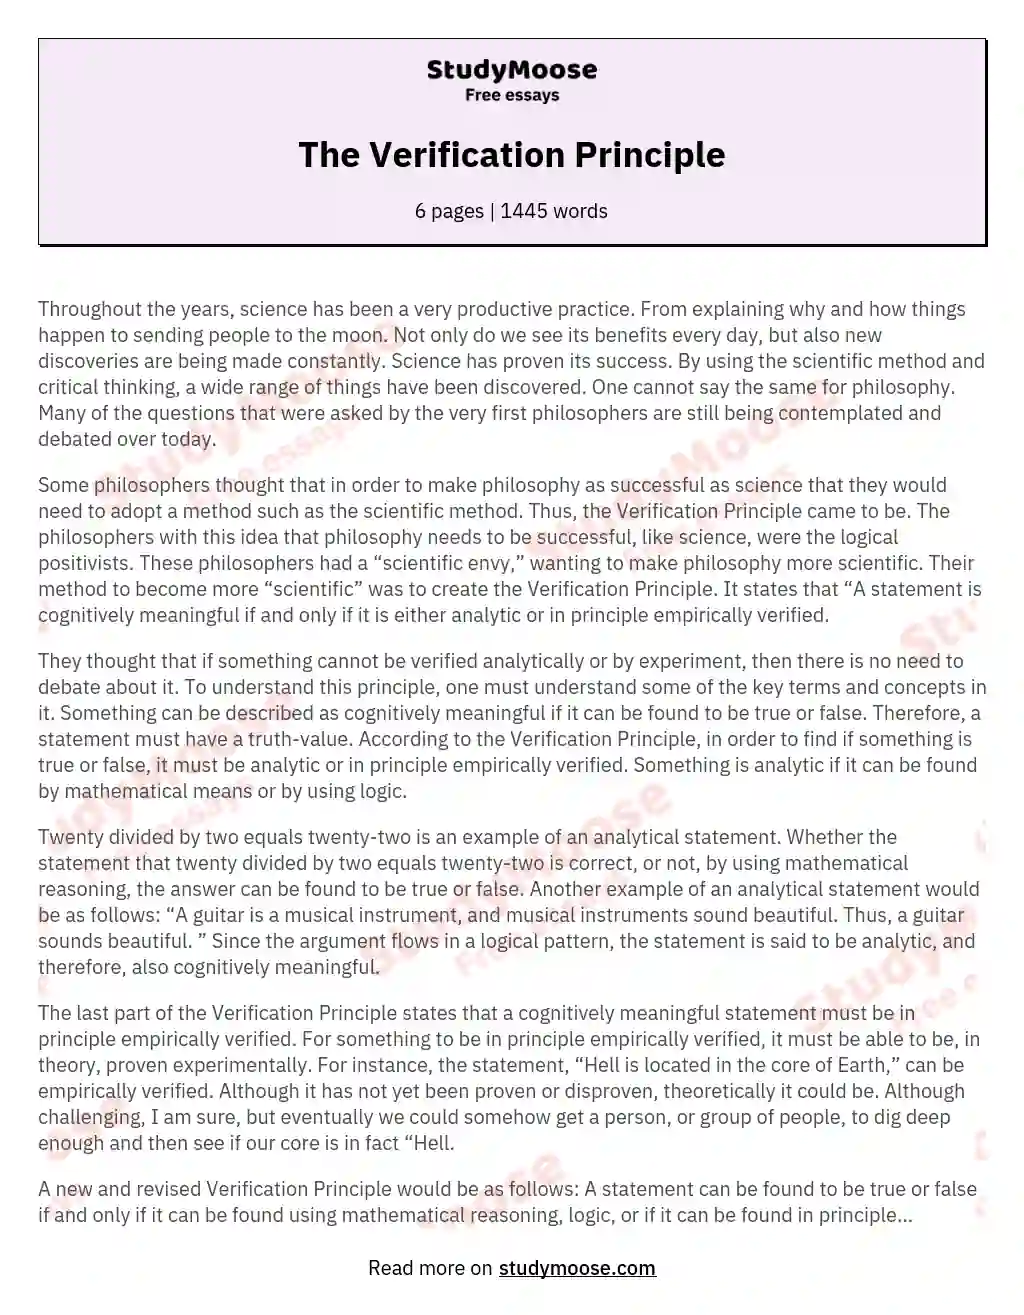 The Verification Principle essay